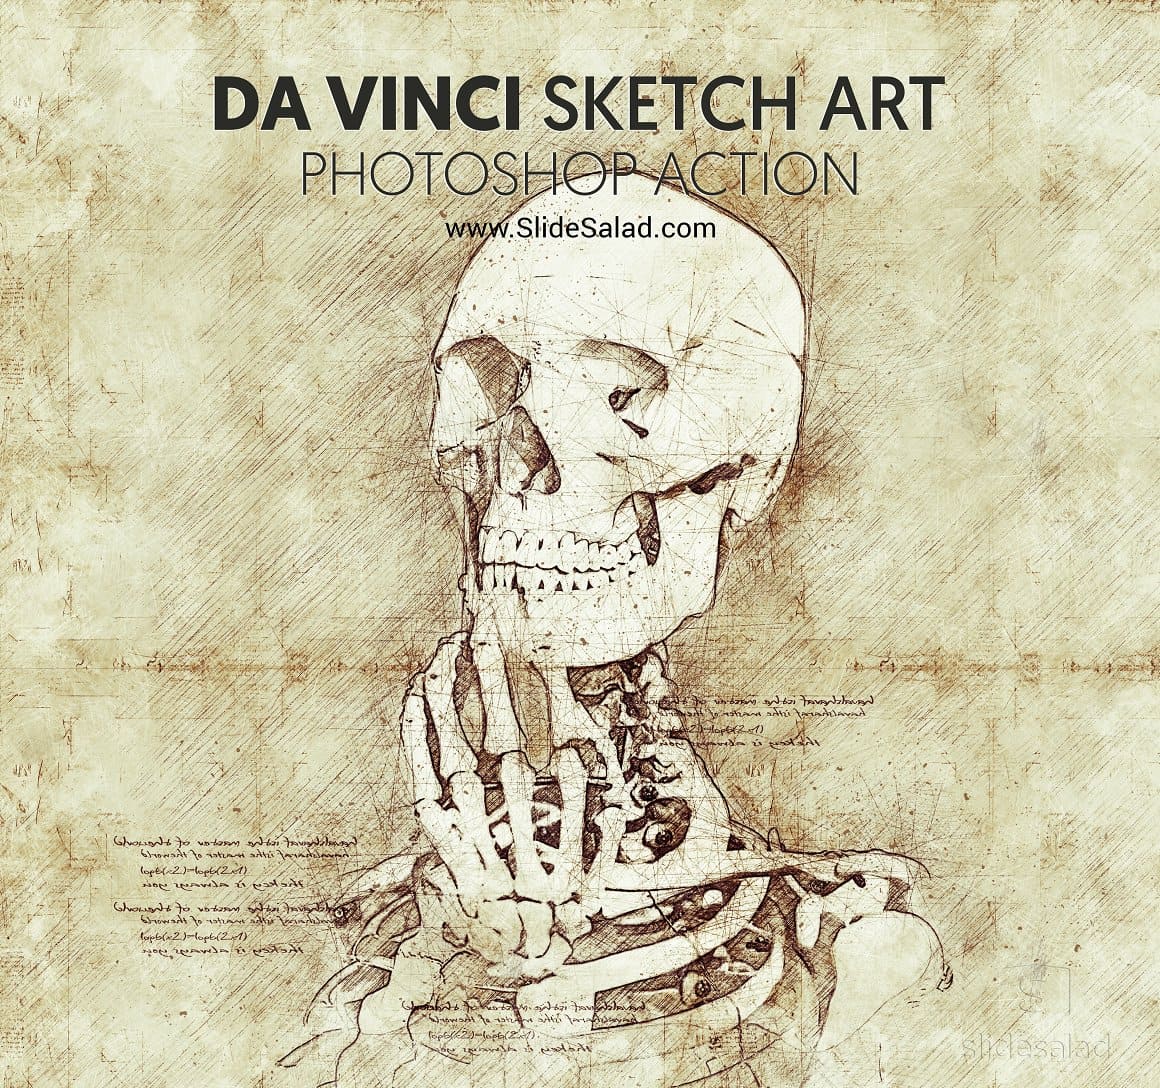 Detailed Skeleton Drawing by Da Vinci Sketch Art Photoshop Action.